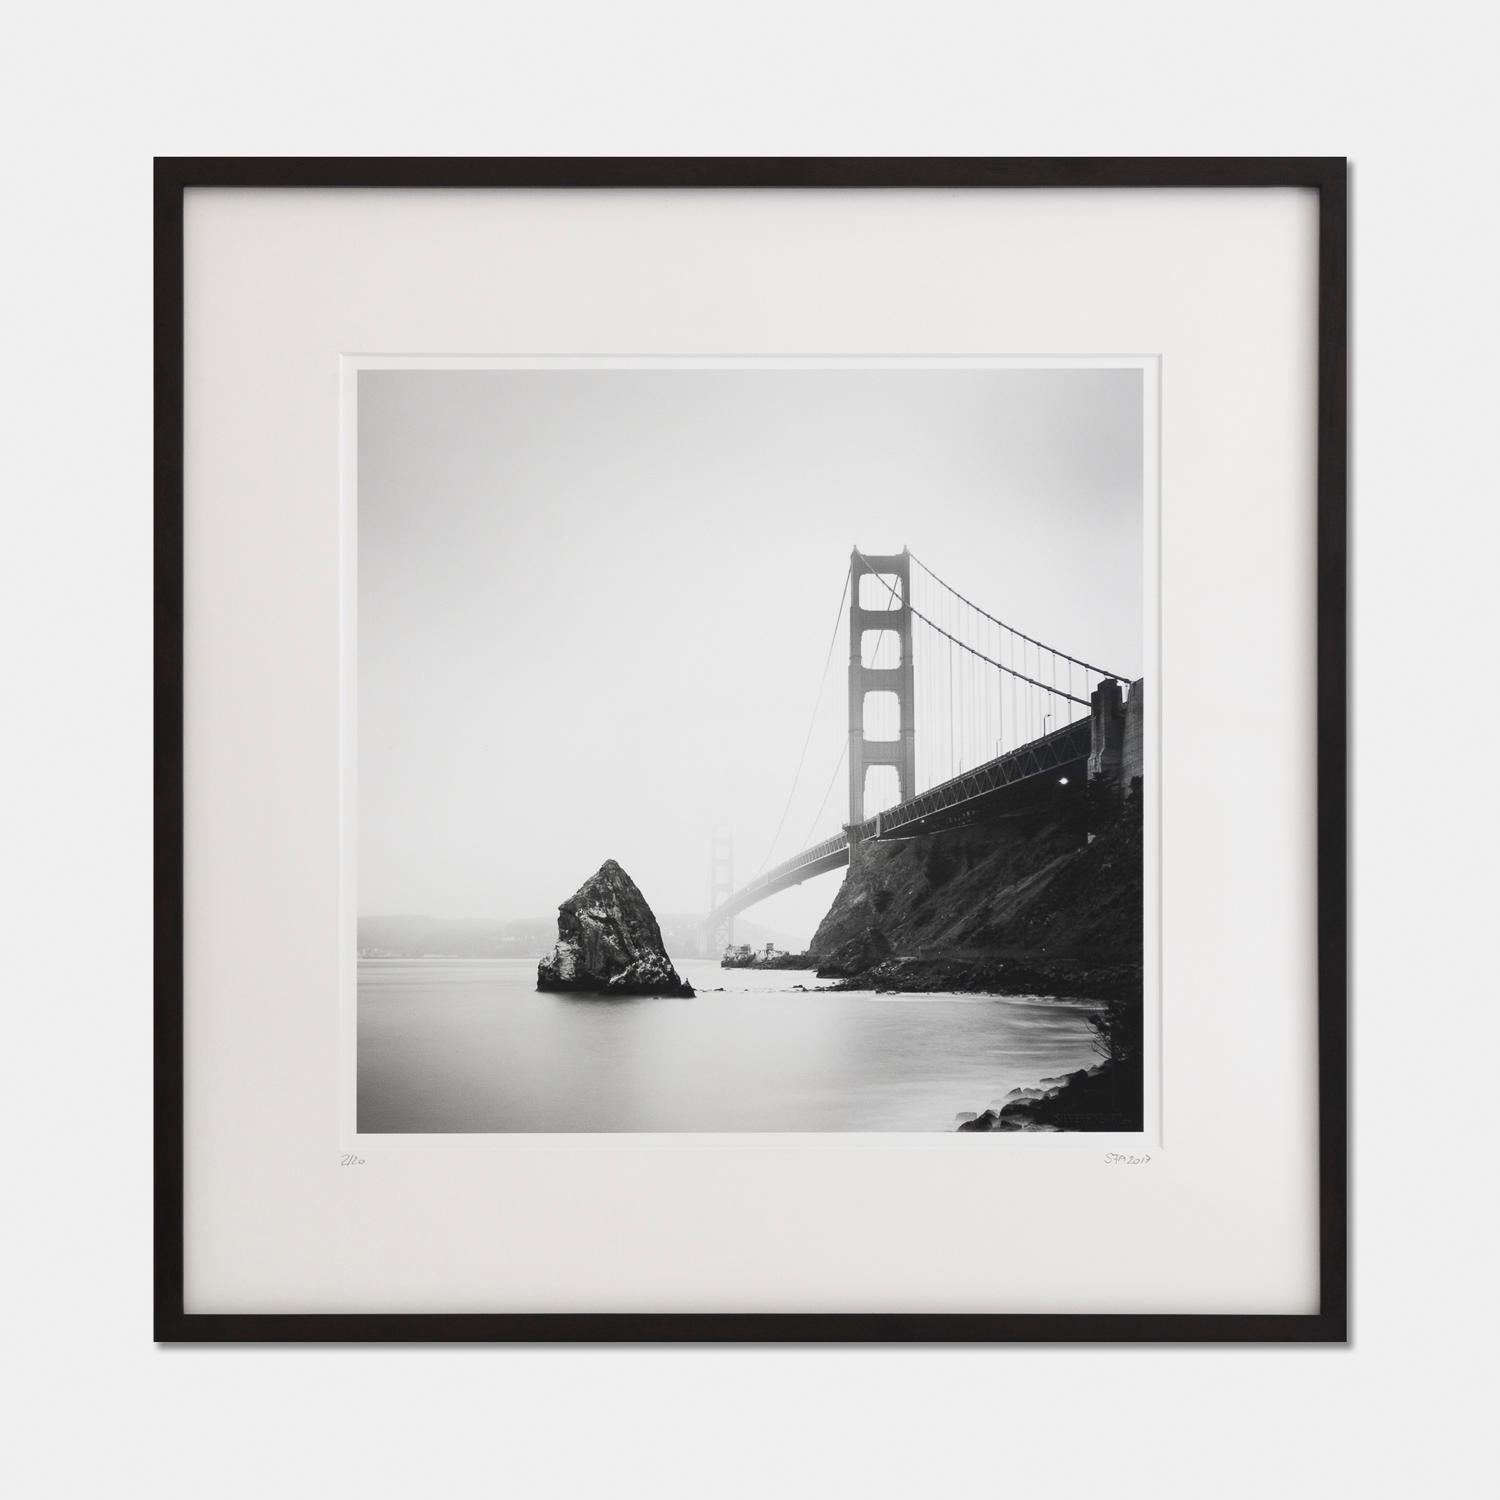 Golden Gate, San Francisco, black and white gelatin silver photography, framed